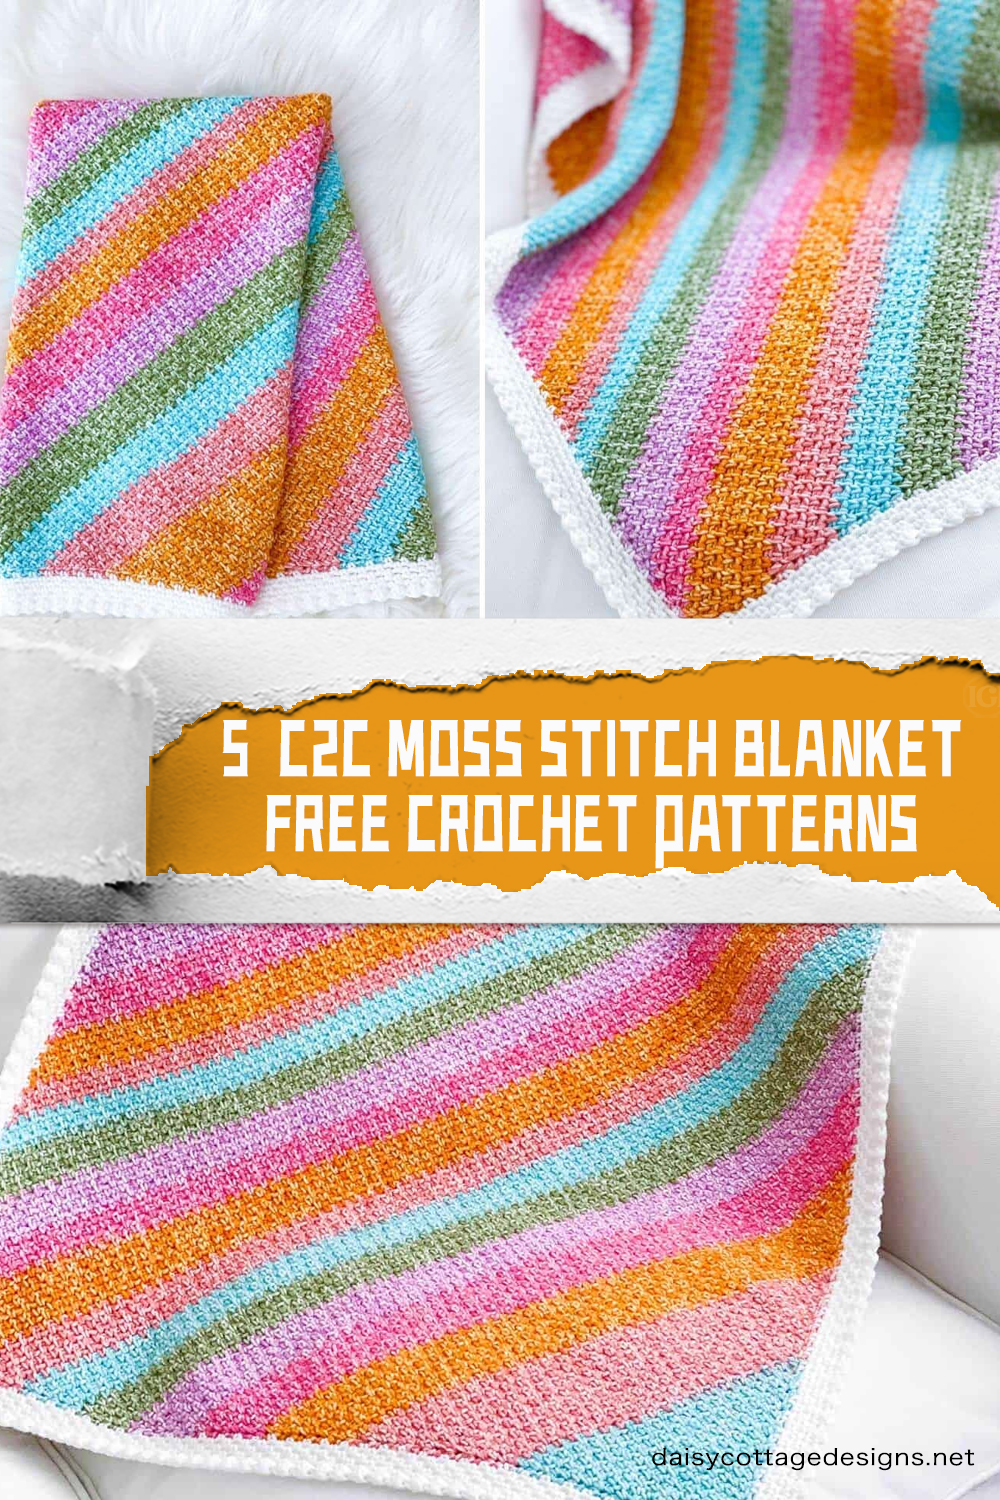 5 FREE Moss Stitch Blanket Crochet Patterns